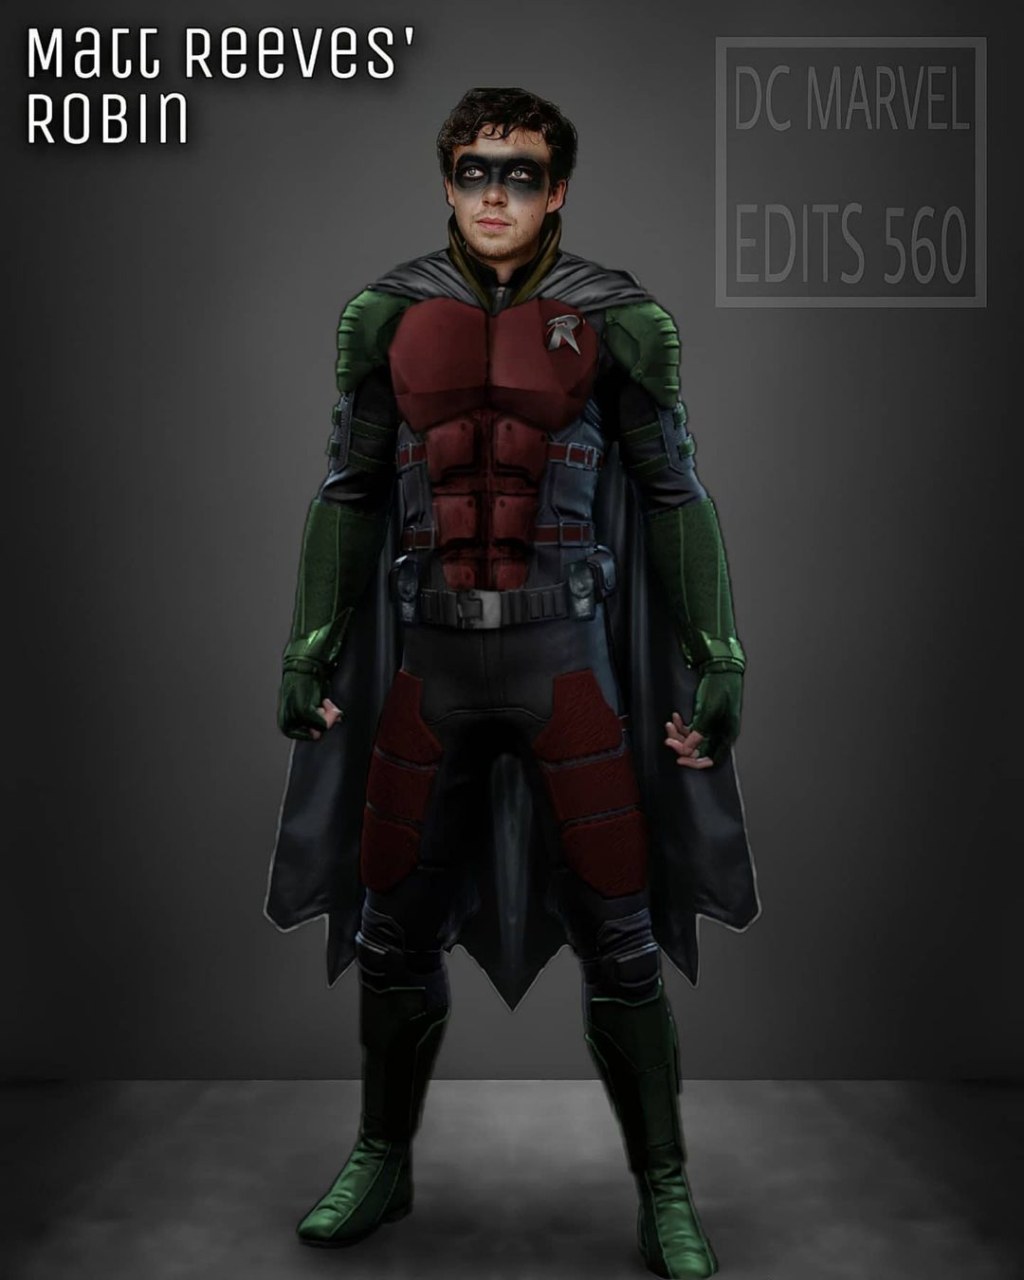 the batman robin concept art - _DCM_edits_ on Instagram: “Matt Reeves